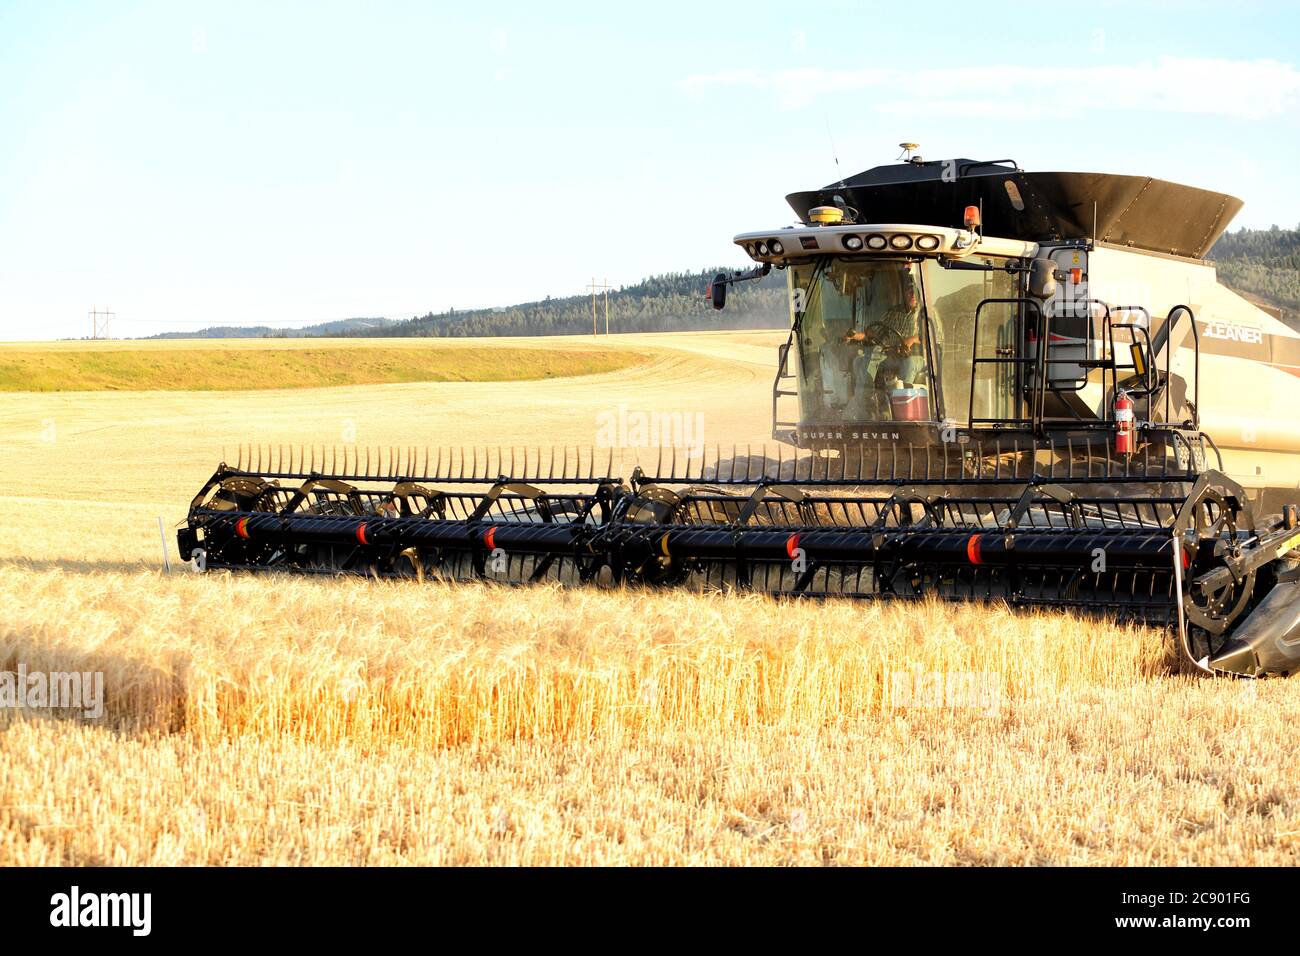 ririe, Idaho, USA Aug. 8, 2016 Farm machinery harvesting wheat in the fertile farm fields of Idaho, with the Teton Mountain range in the background. Stock Photo